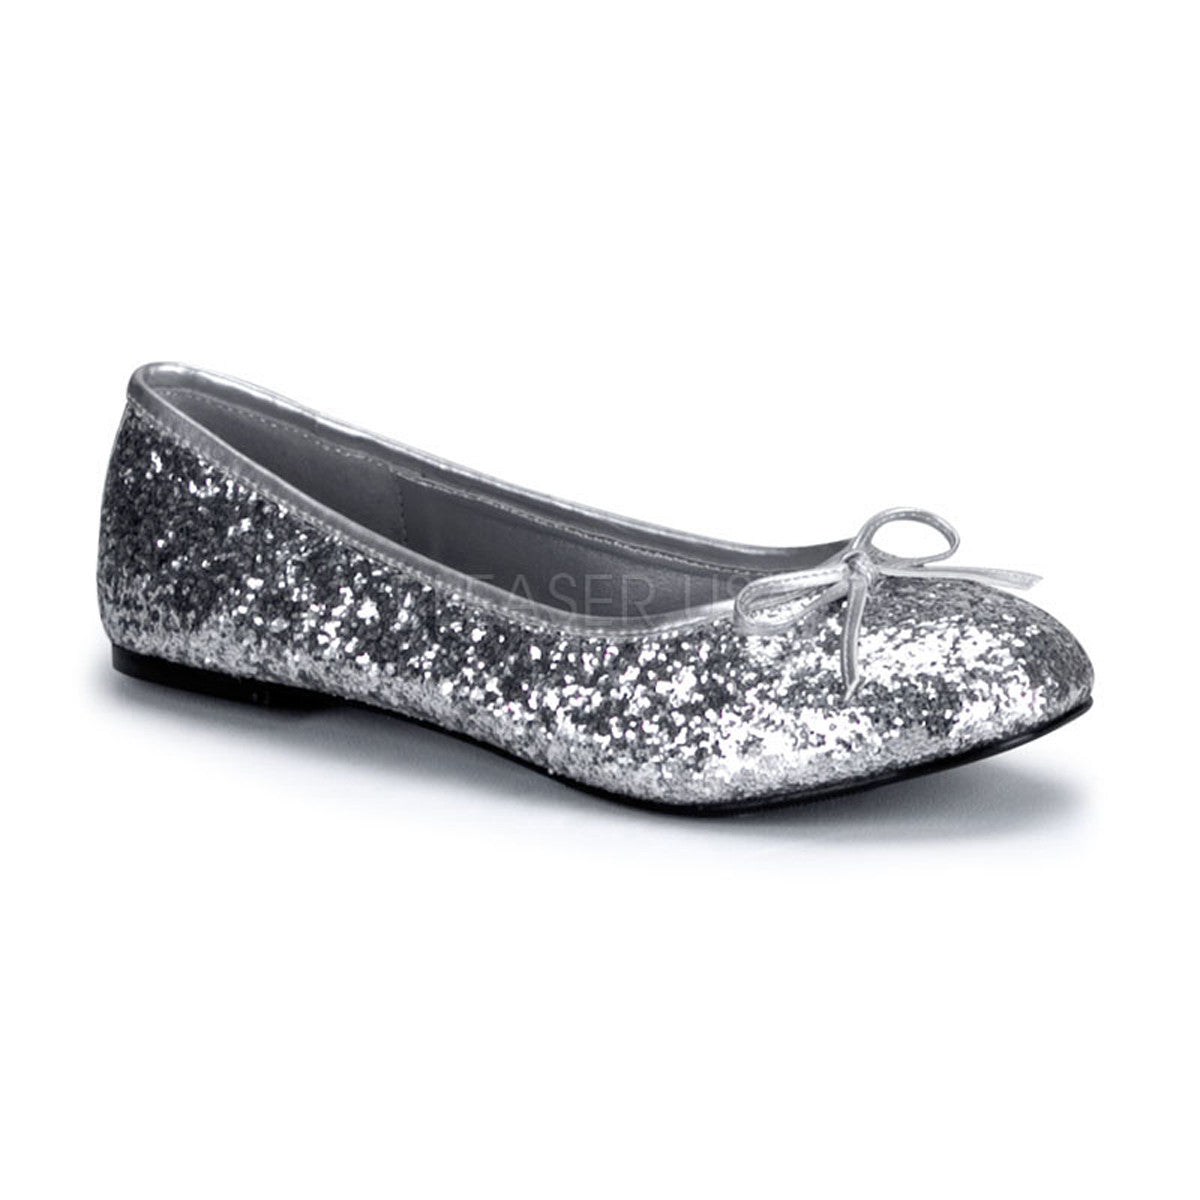 FUNTASMA STAR-16G Silver Glitter Ballet Flat - Shoecup.com